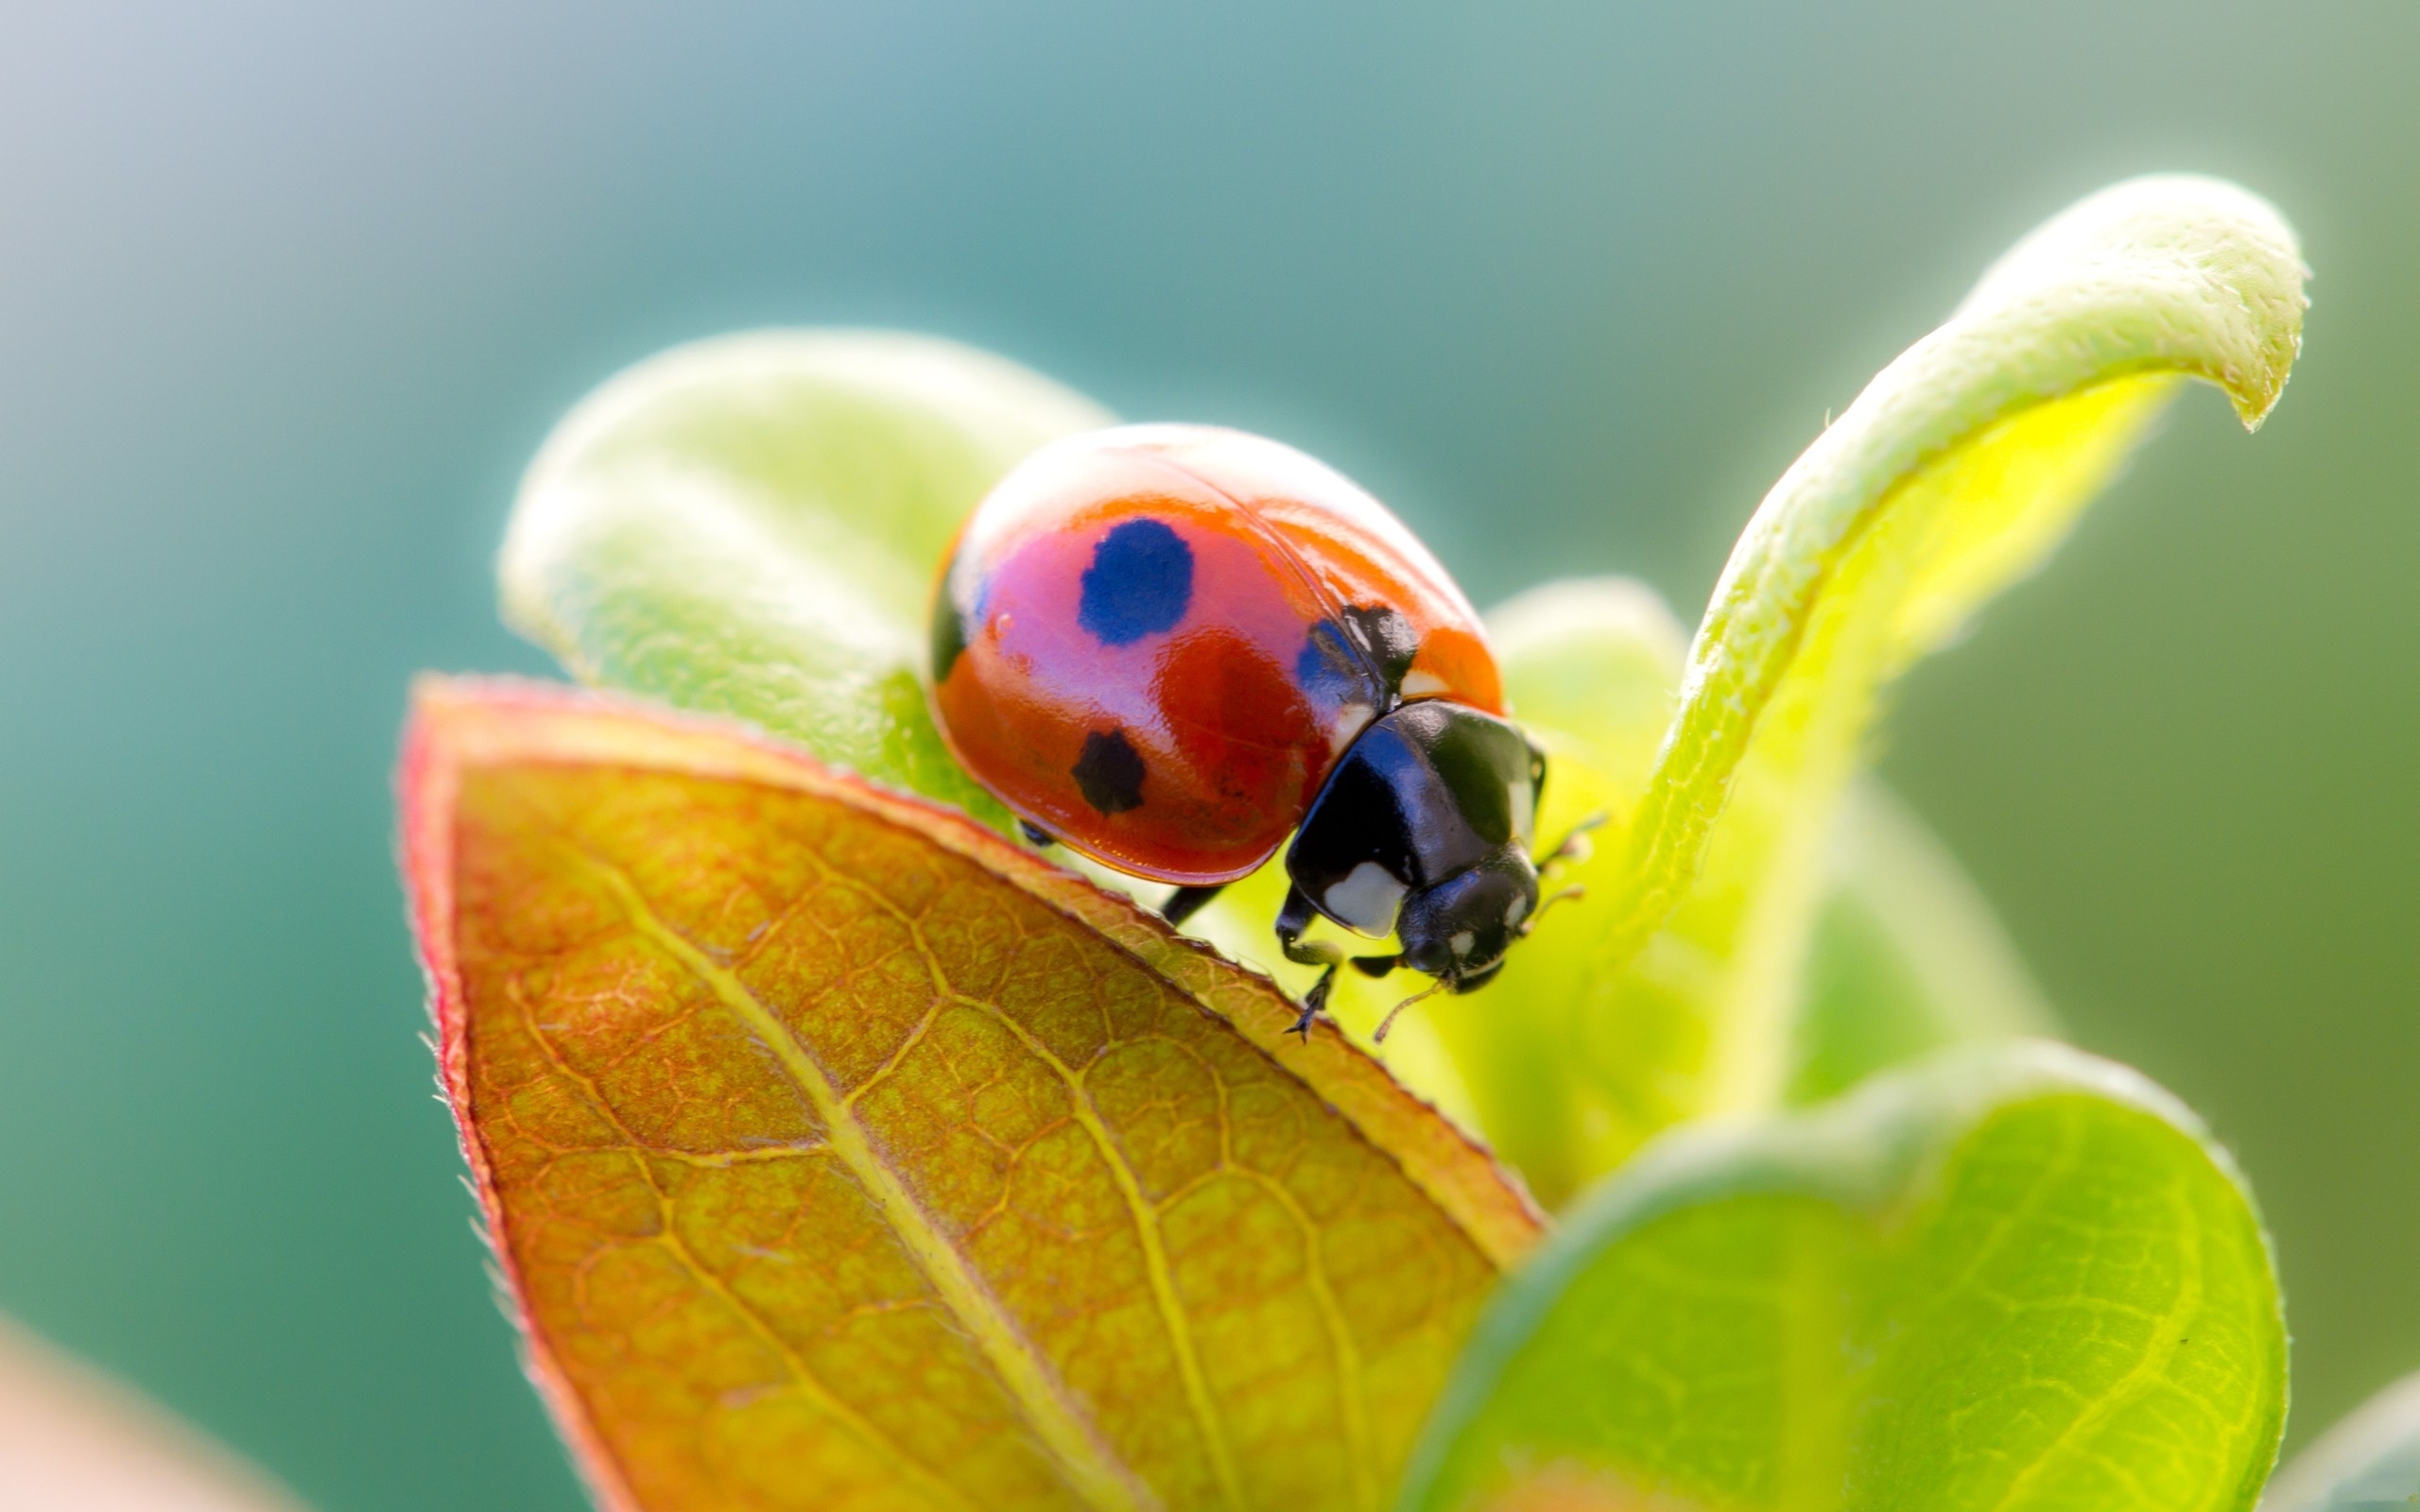 A ladybug crawls on an autumn leaf